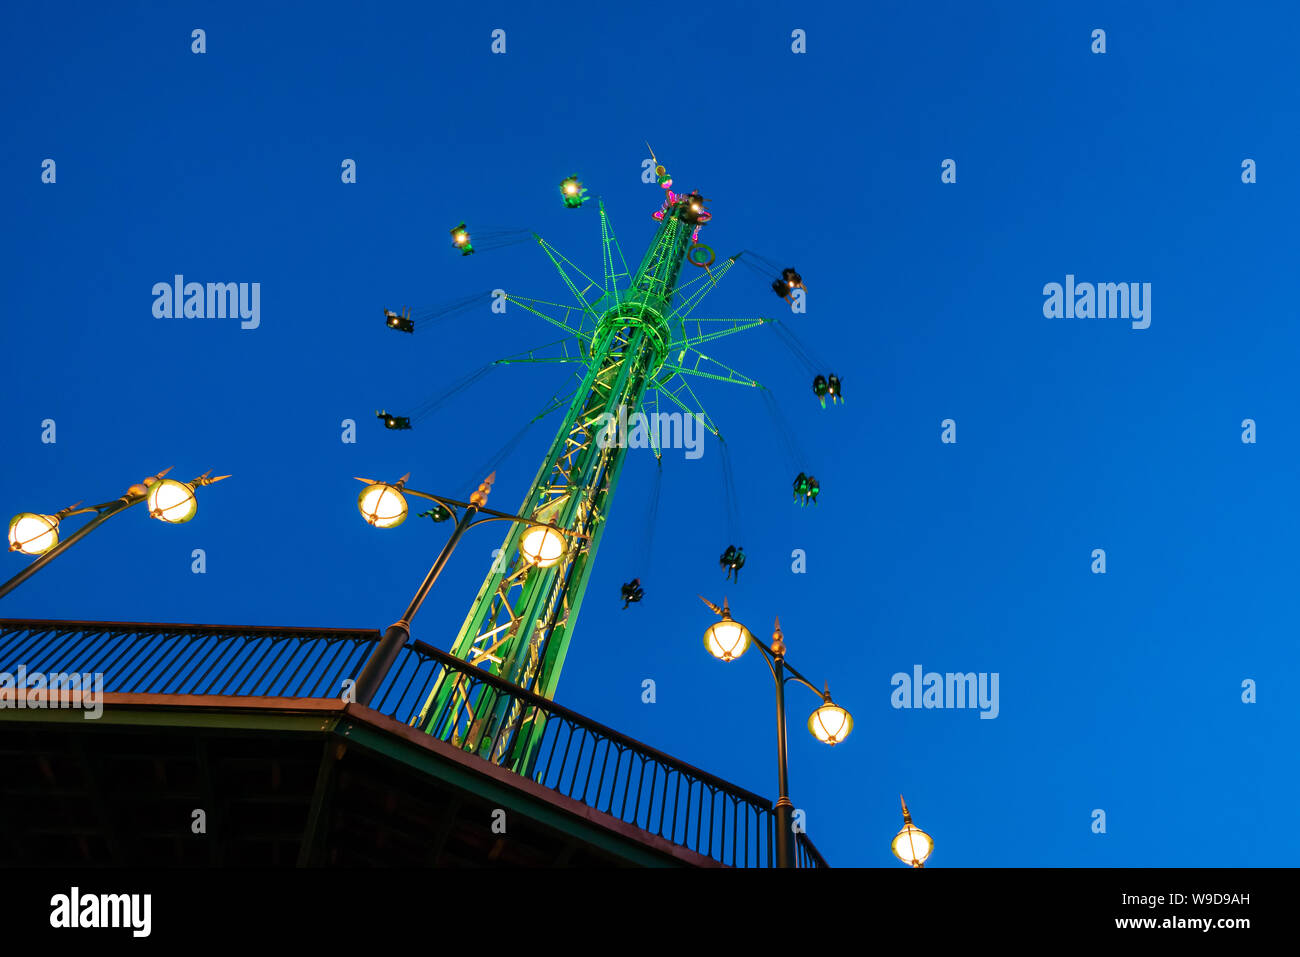 The swing ride or chair swing ride in the Tivoli amusement park at night at Copenhagen Denmark Stock Photo